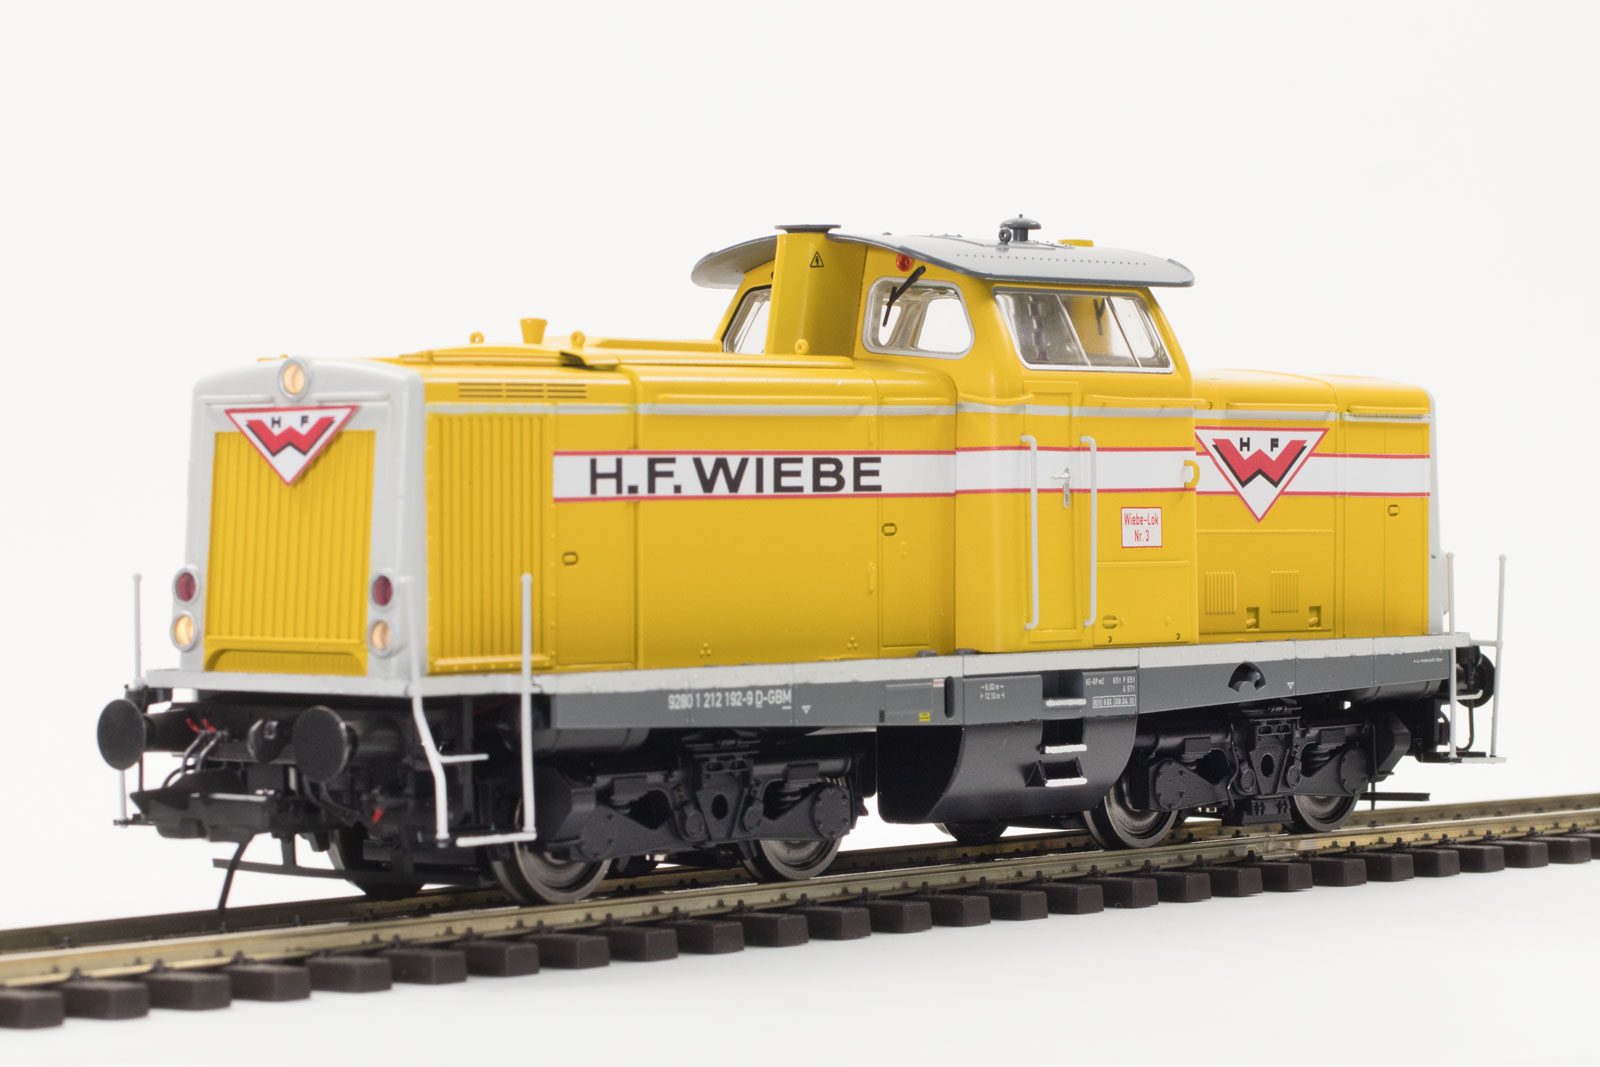 WIEBE Diesellok BR 212 Ep6 gelb, Lok Nr.: 3, Betr.-Nr.: 9280 1 212 192-9 D-GBM, Edition-Modell